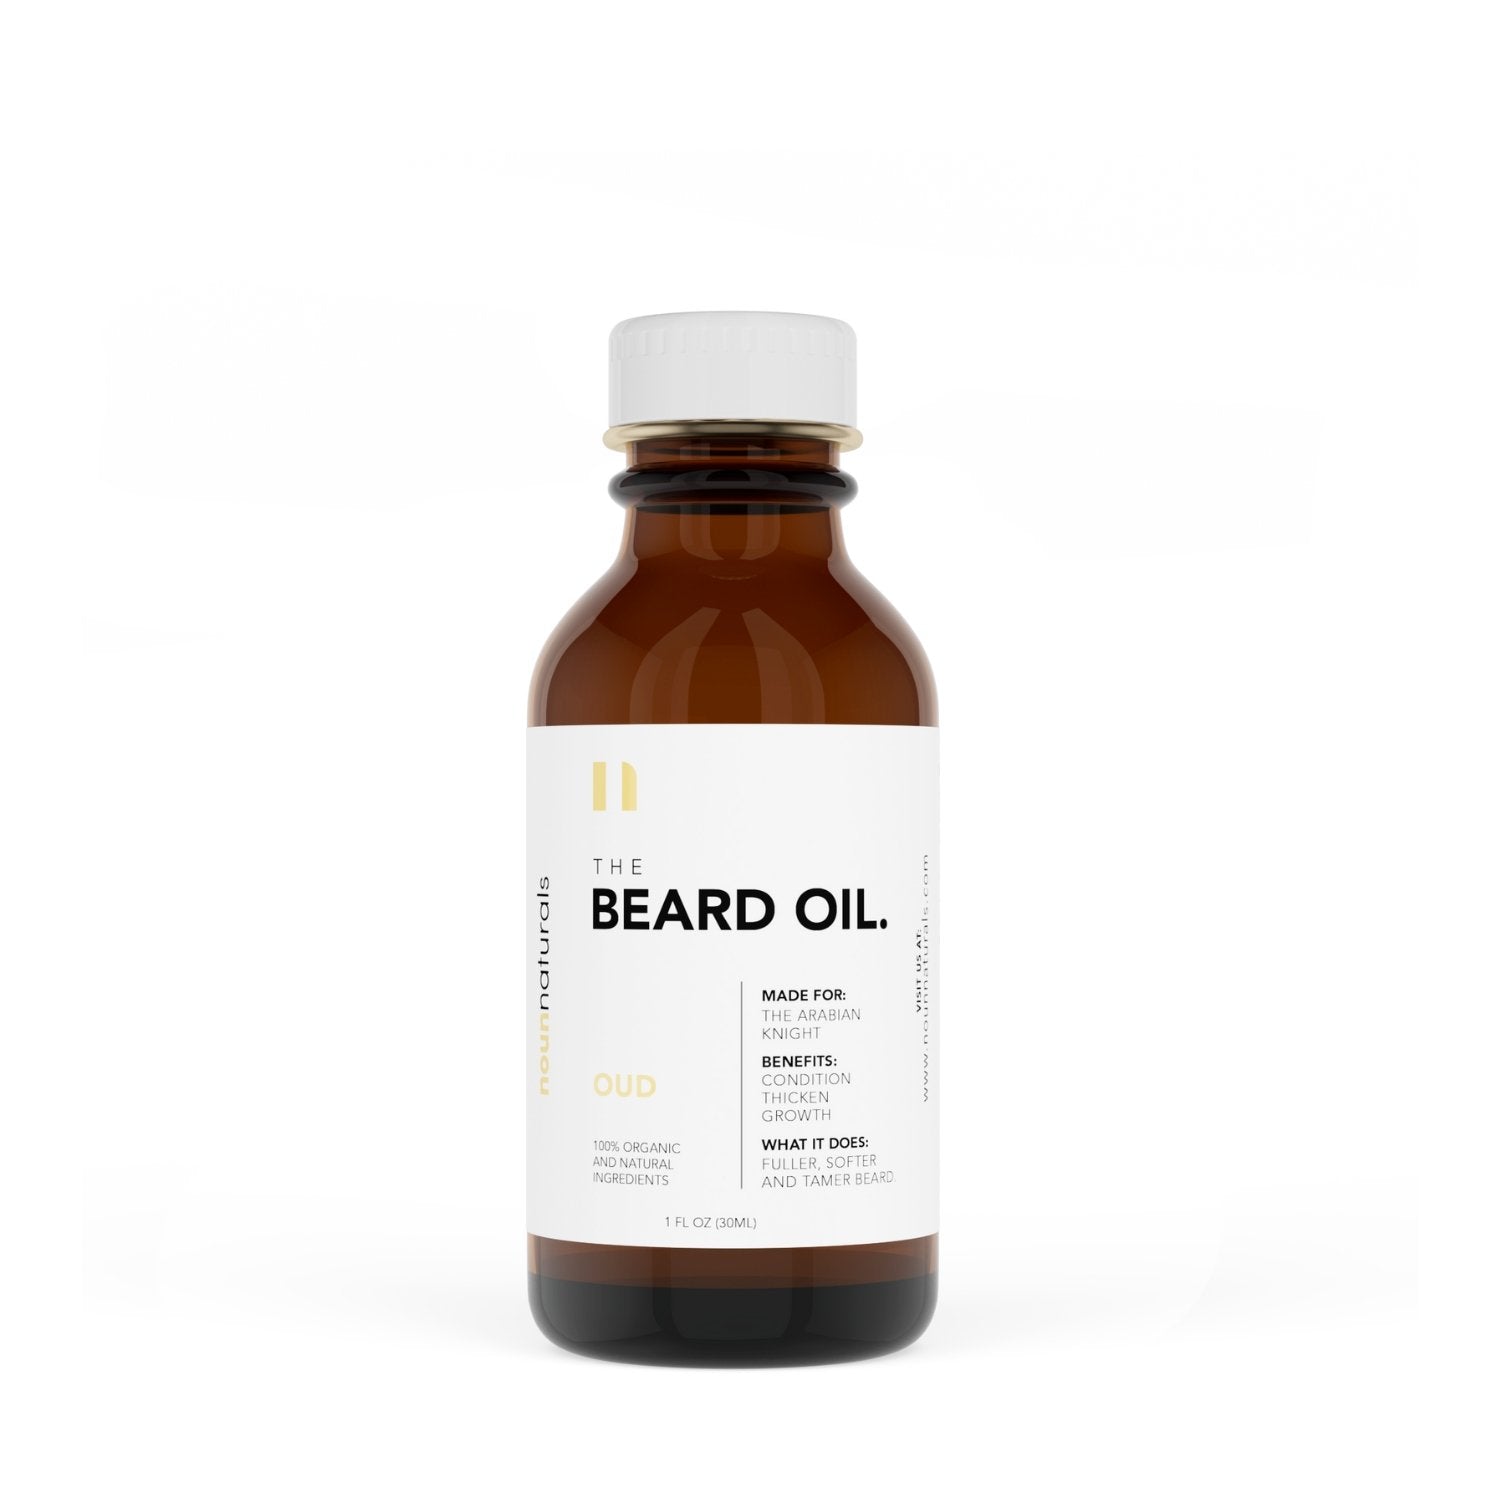 The Beard Oil - Noun Naturals Habibi Oil - Habibi Life - Noun Beard Oil -Habibi Oil - Hair Growth Oil